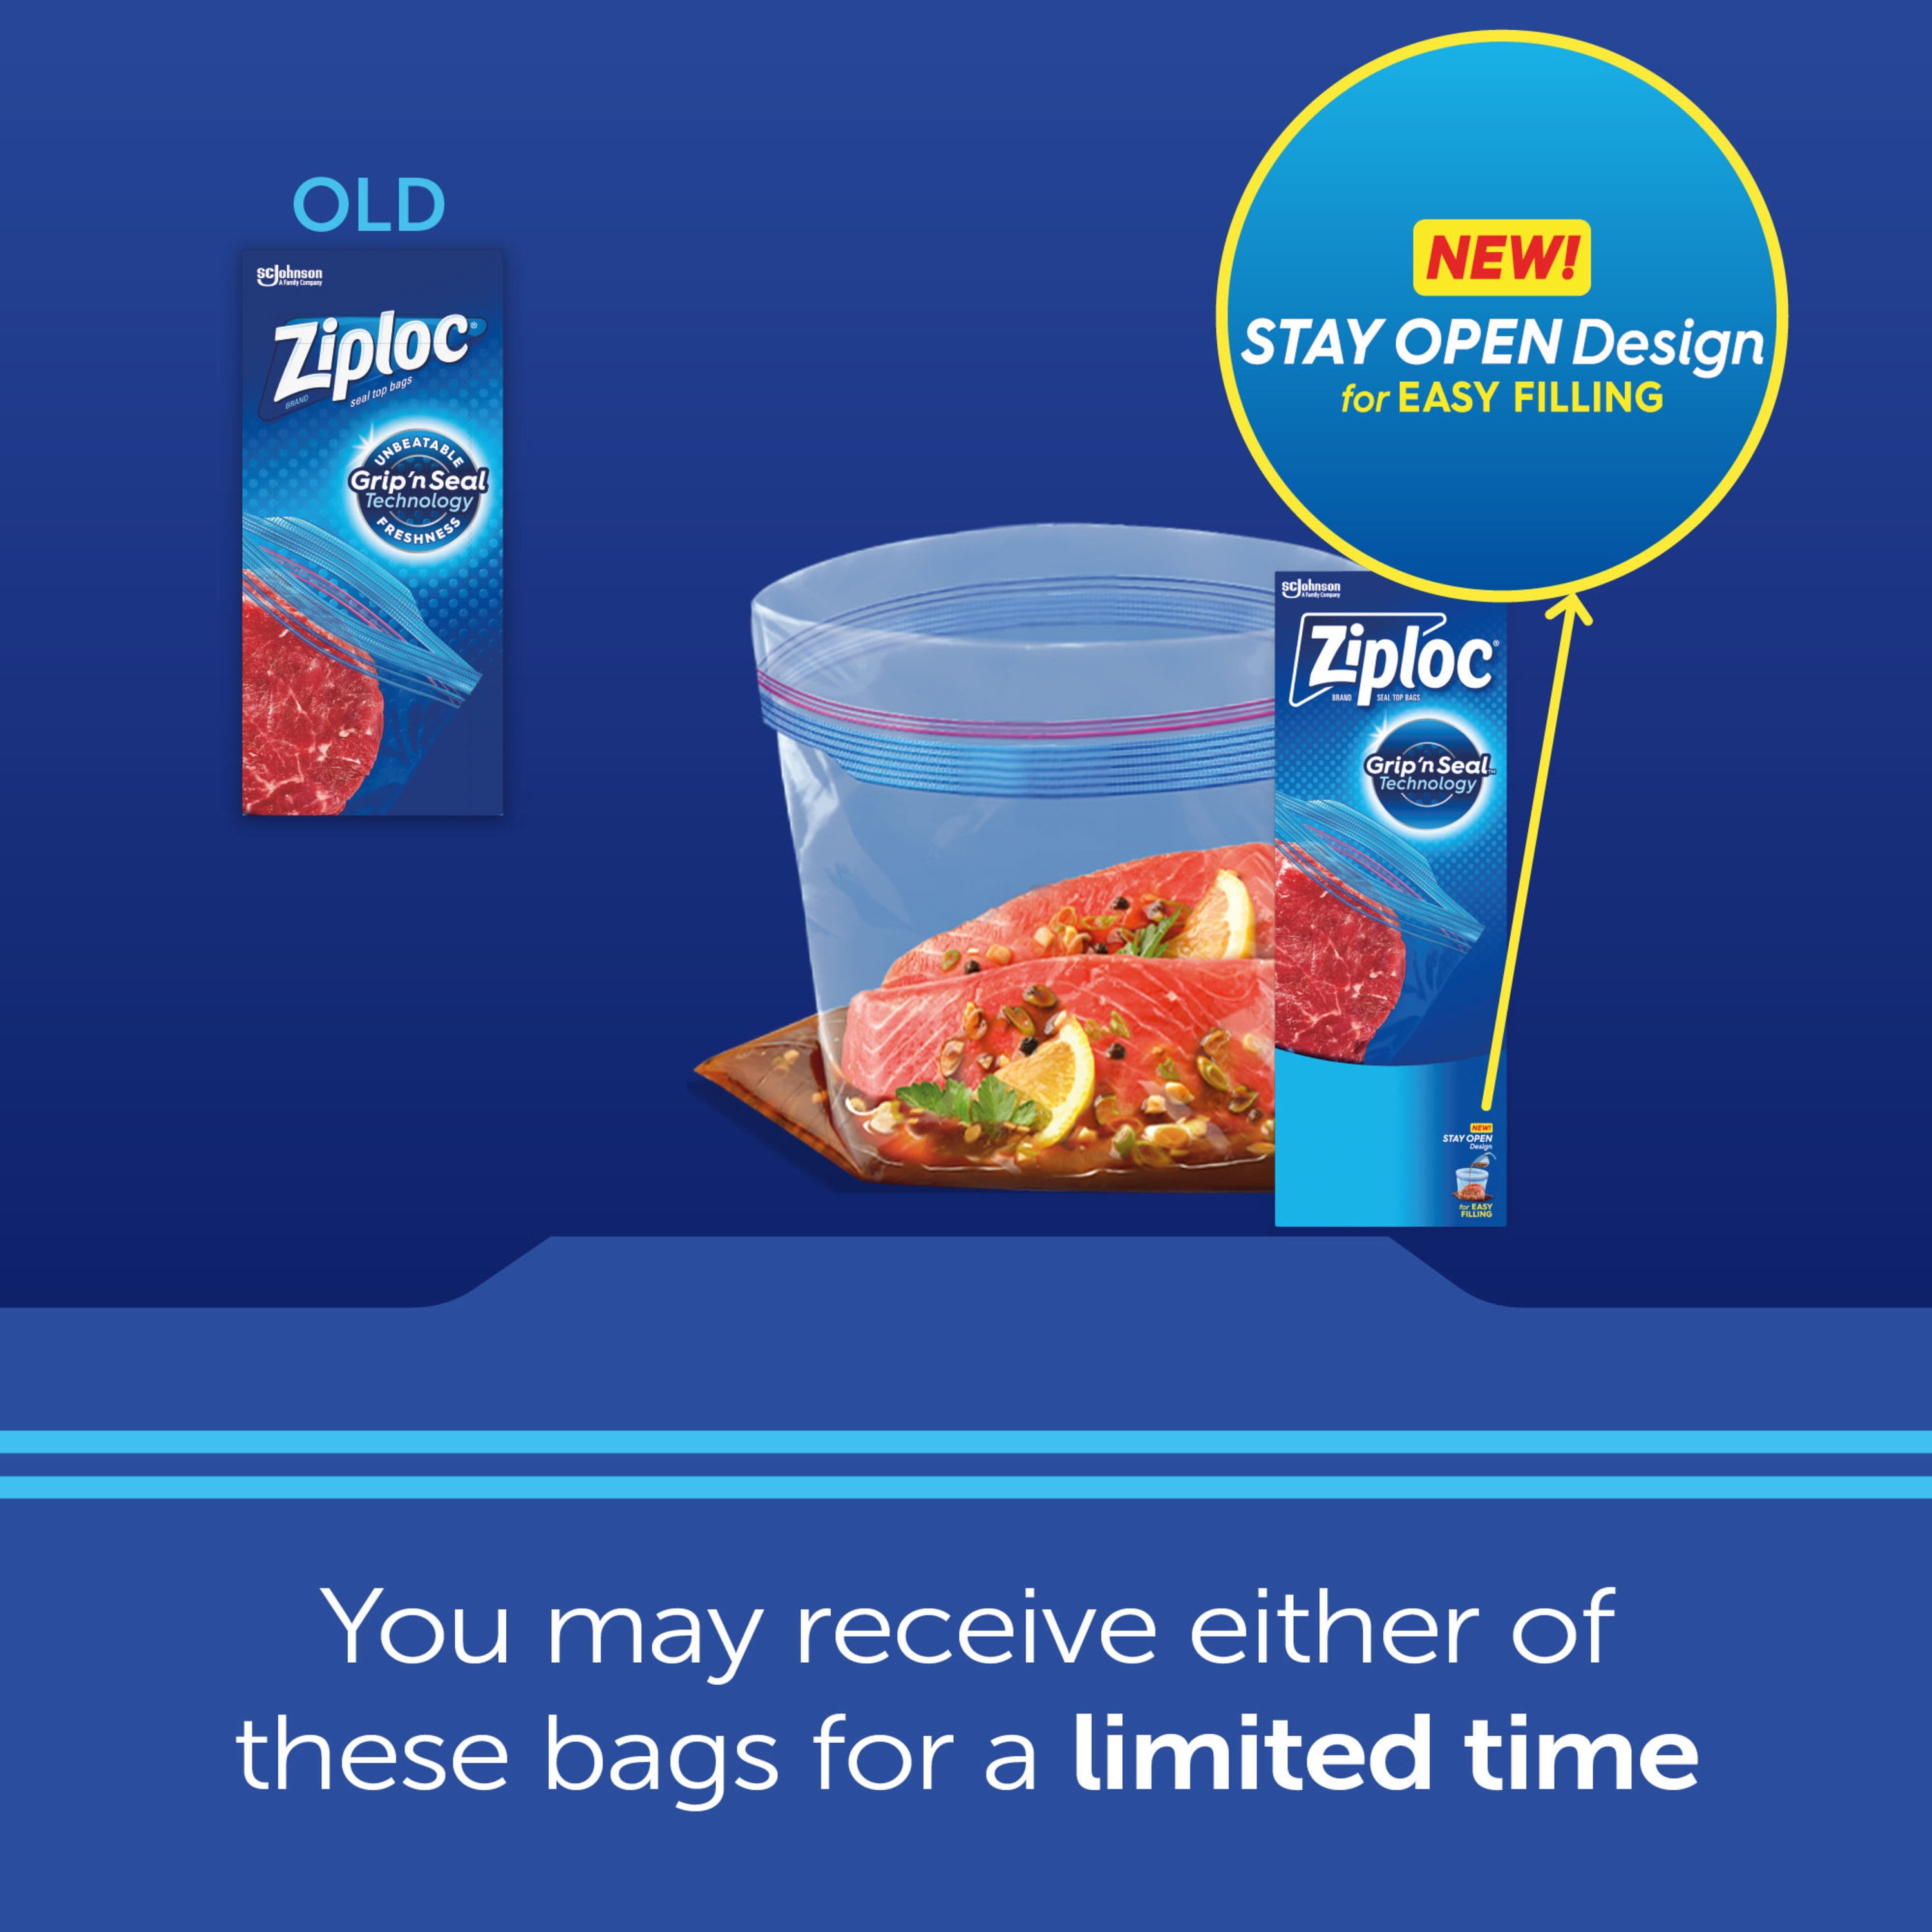 Ziploc®, Freezer Bags Gallon, Ziploc® brand